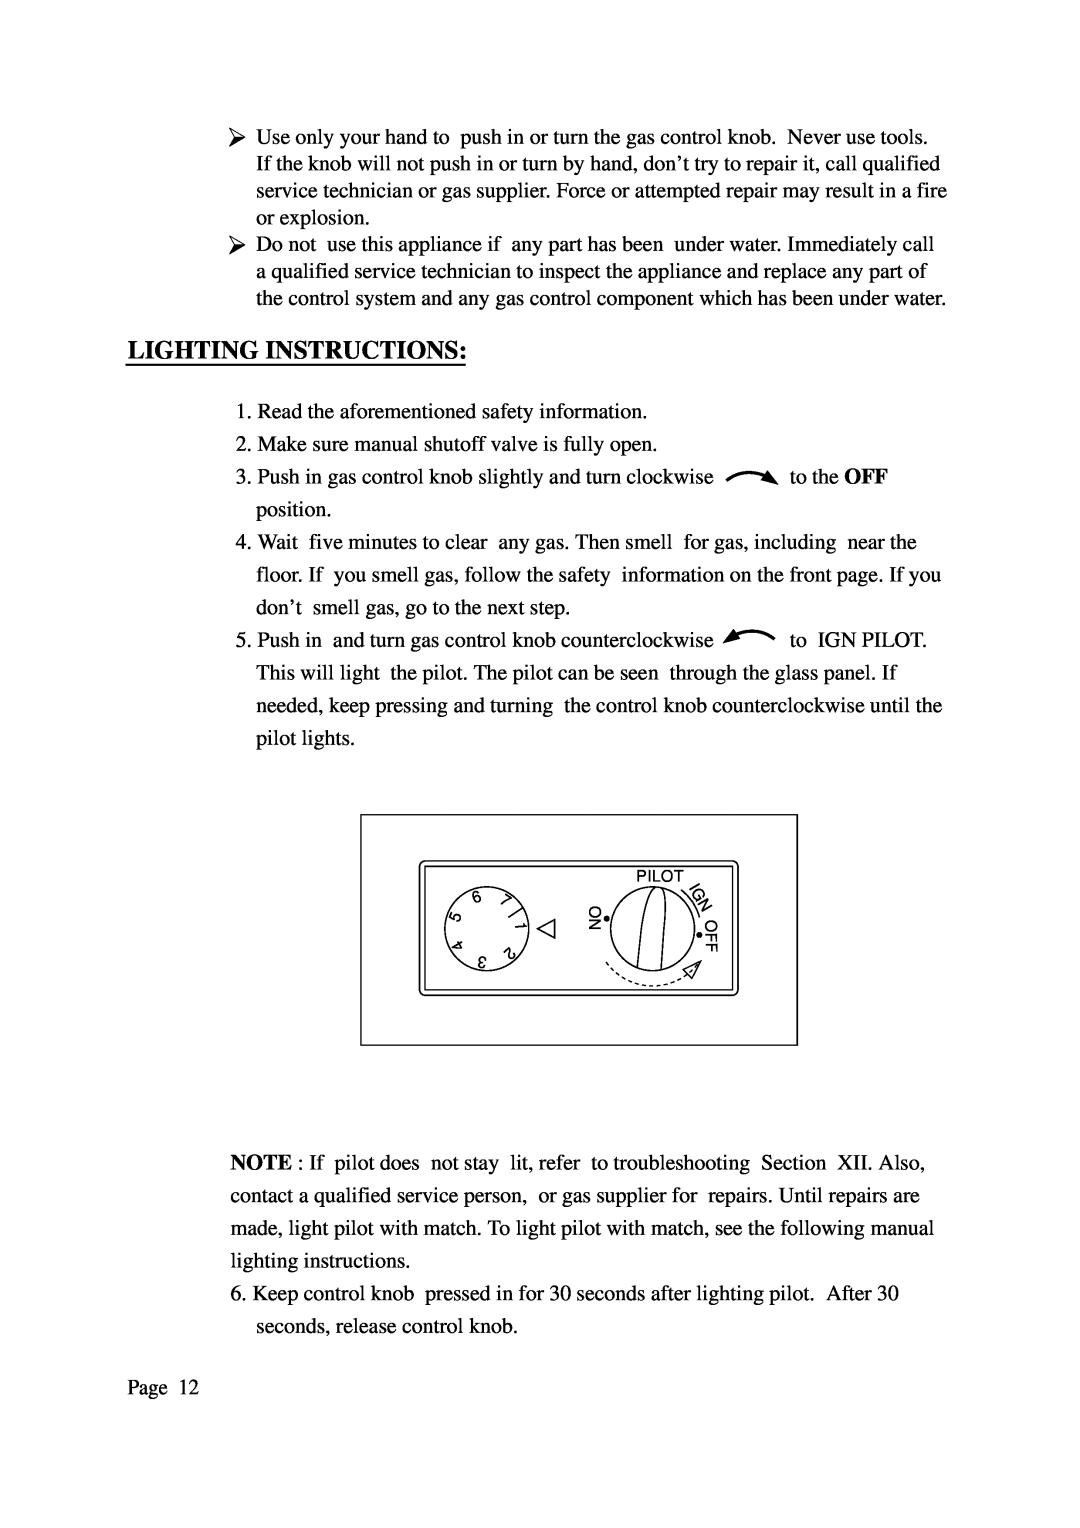 DreamGEAR P314, P186, N313, N185 installation manual Lighting Instructions 